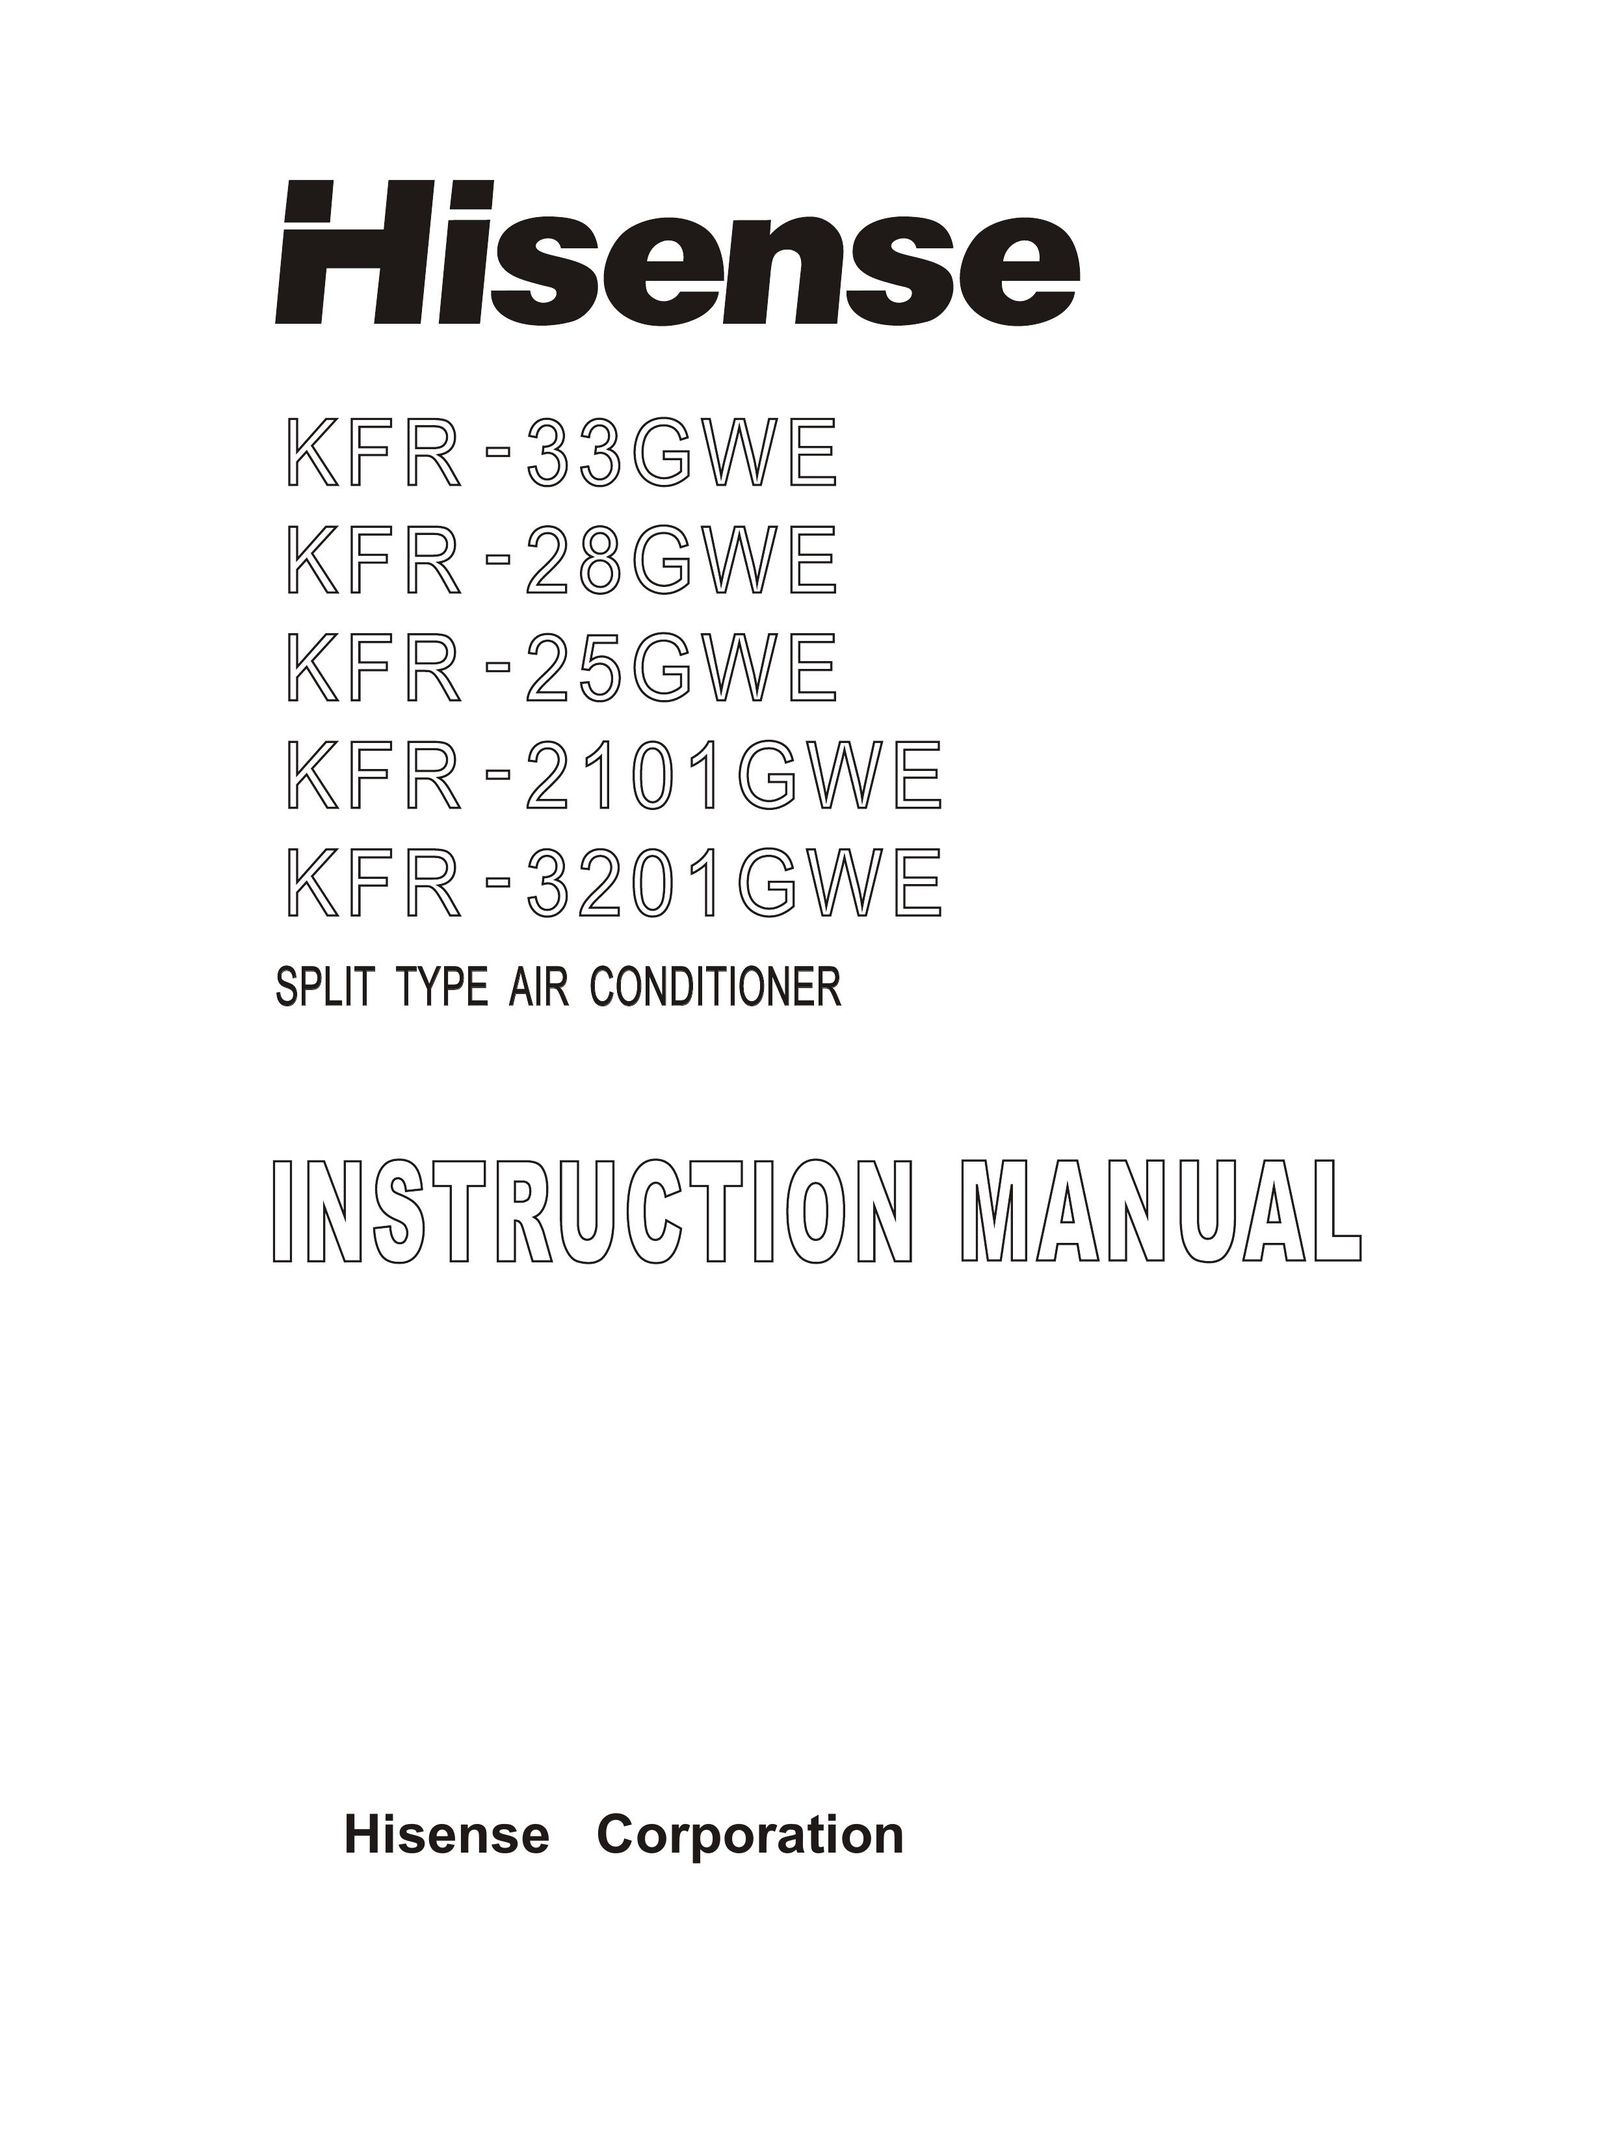 Hisense Group KFR 2101GWE Air Conditioner User Manual